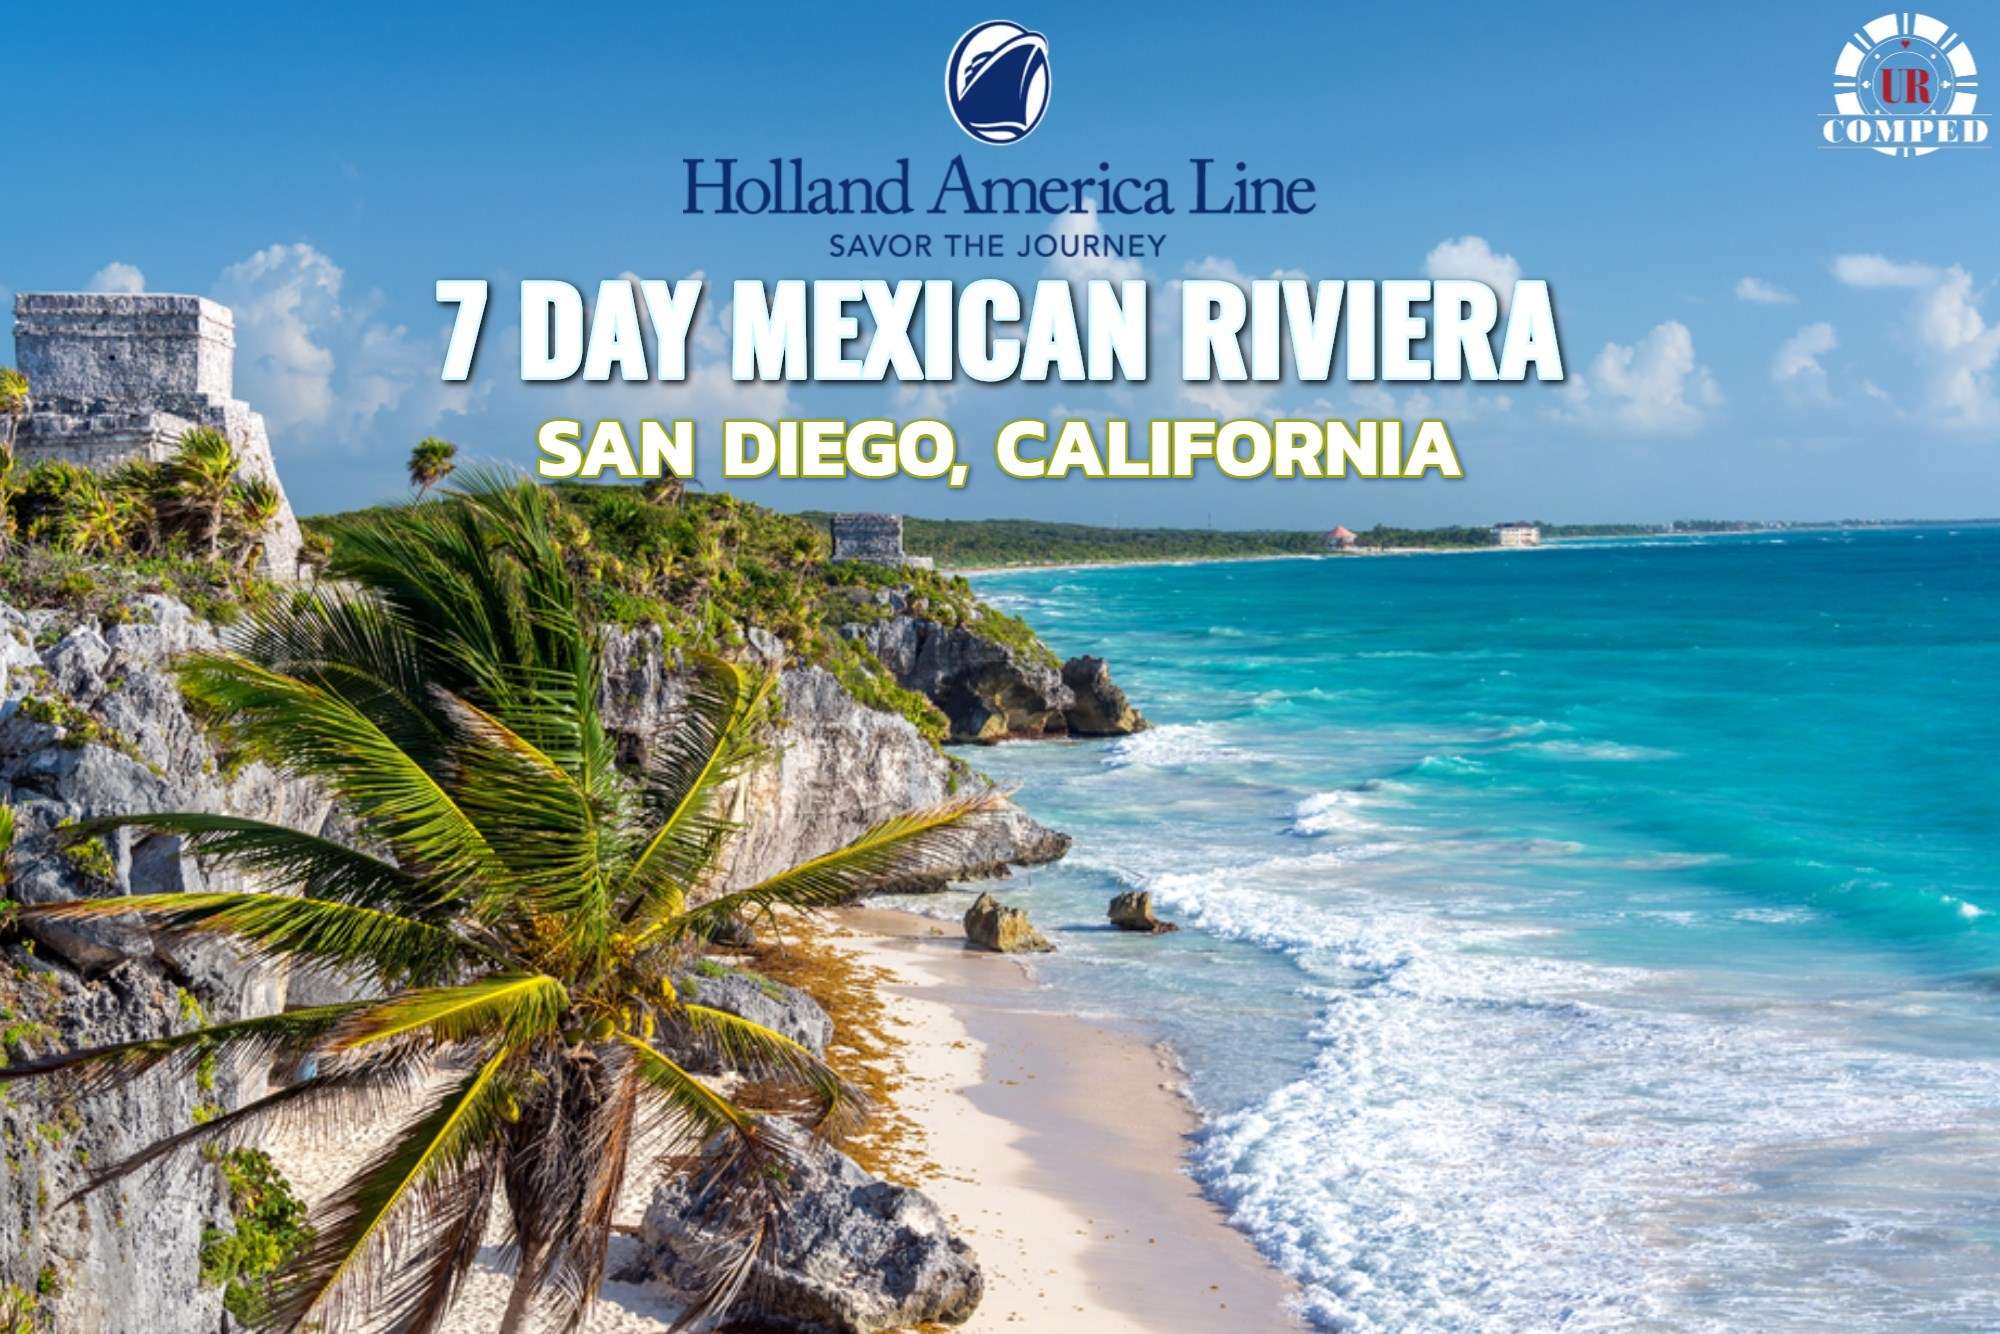 7 Day Mexican Riviera Cruise, Round trip San Diego!